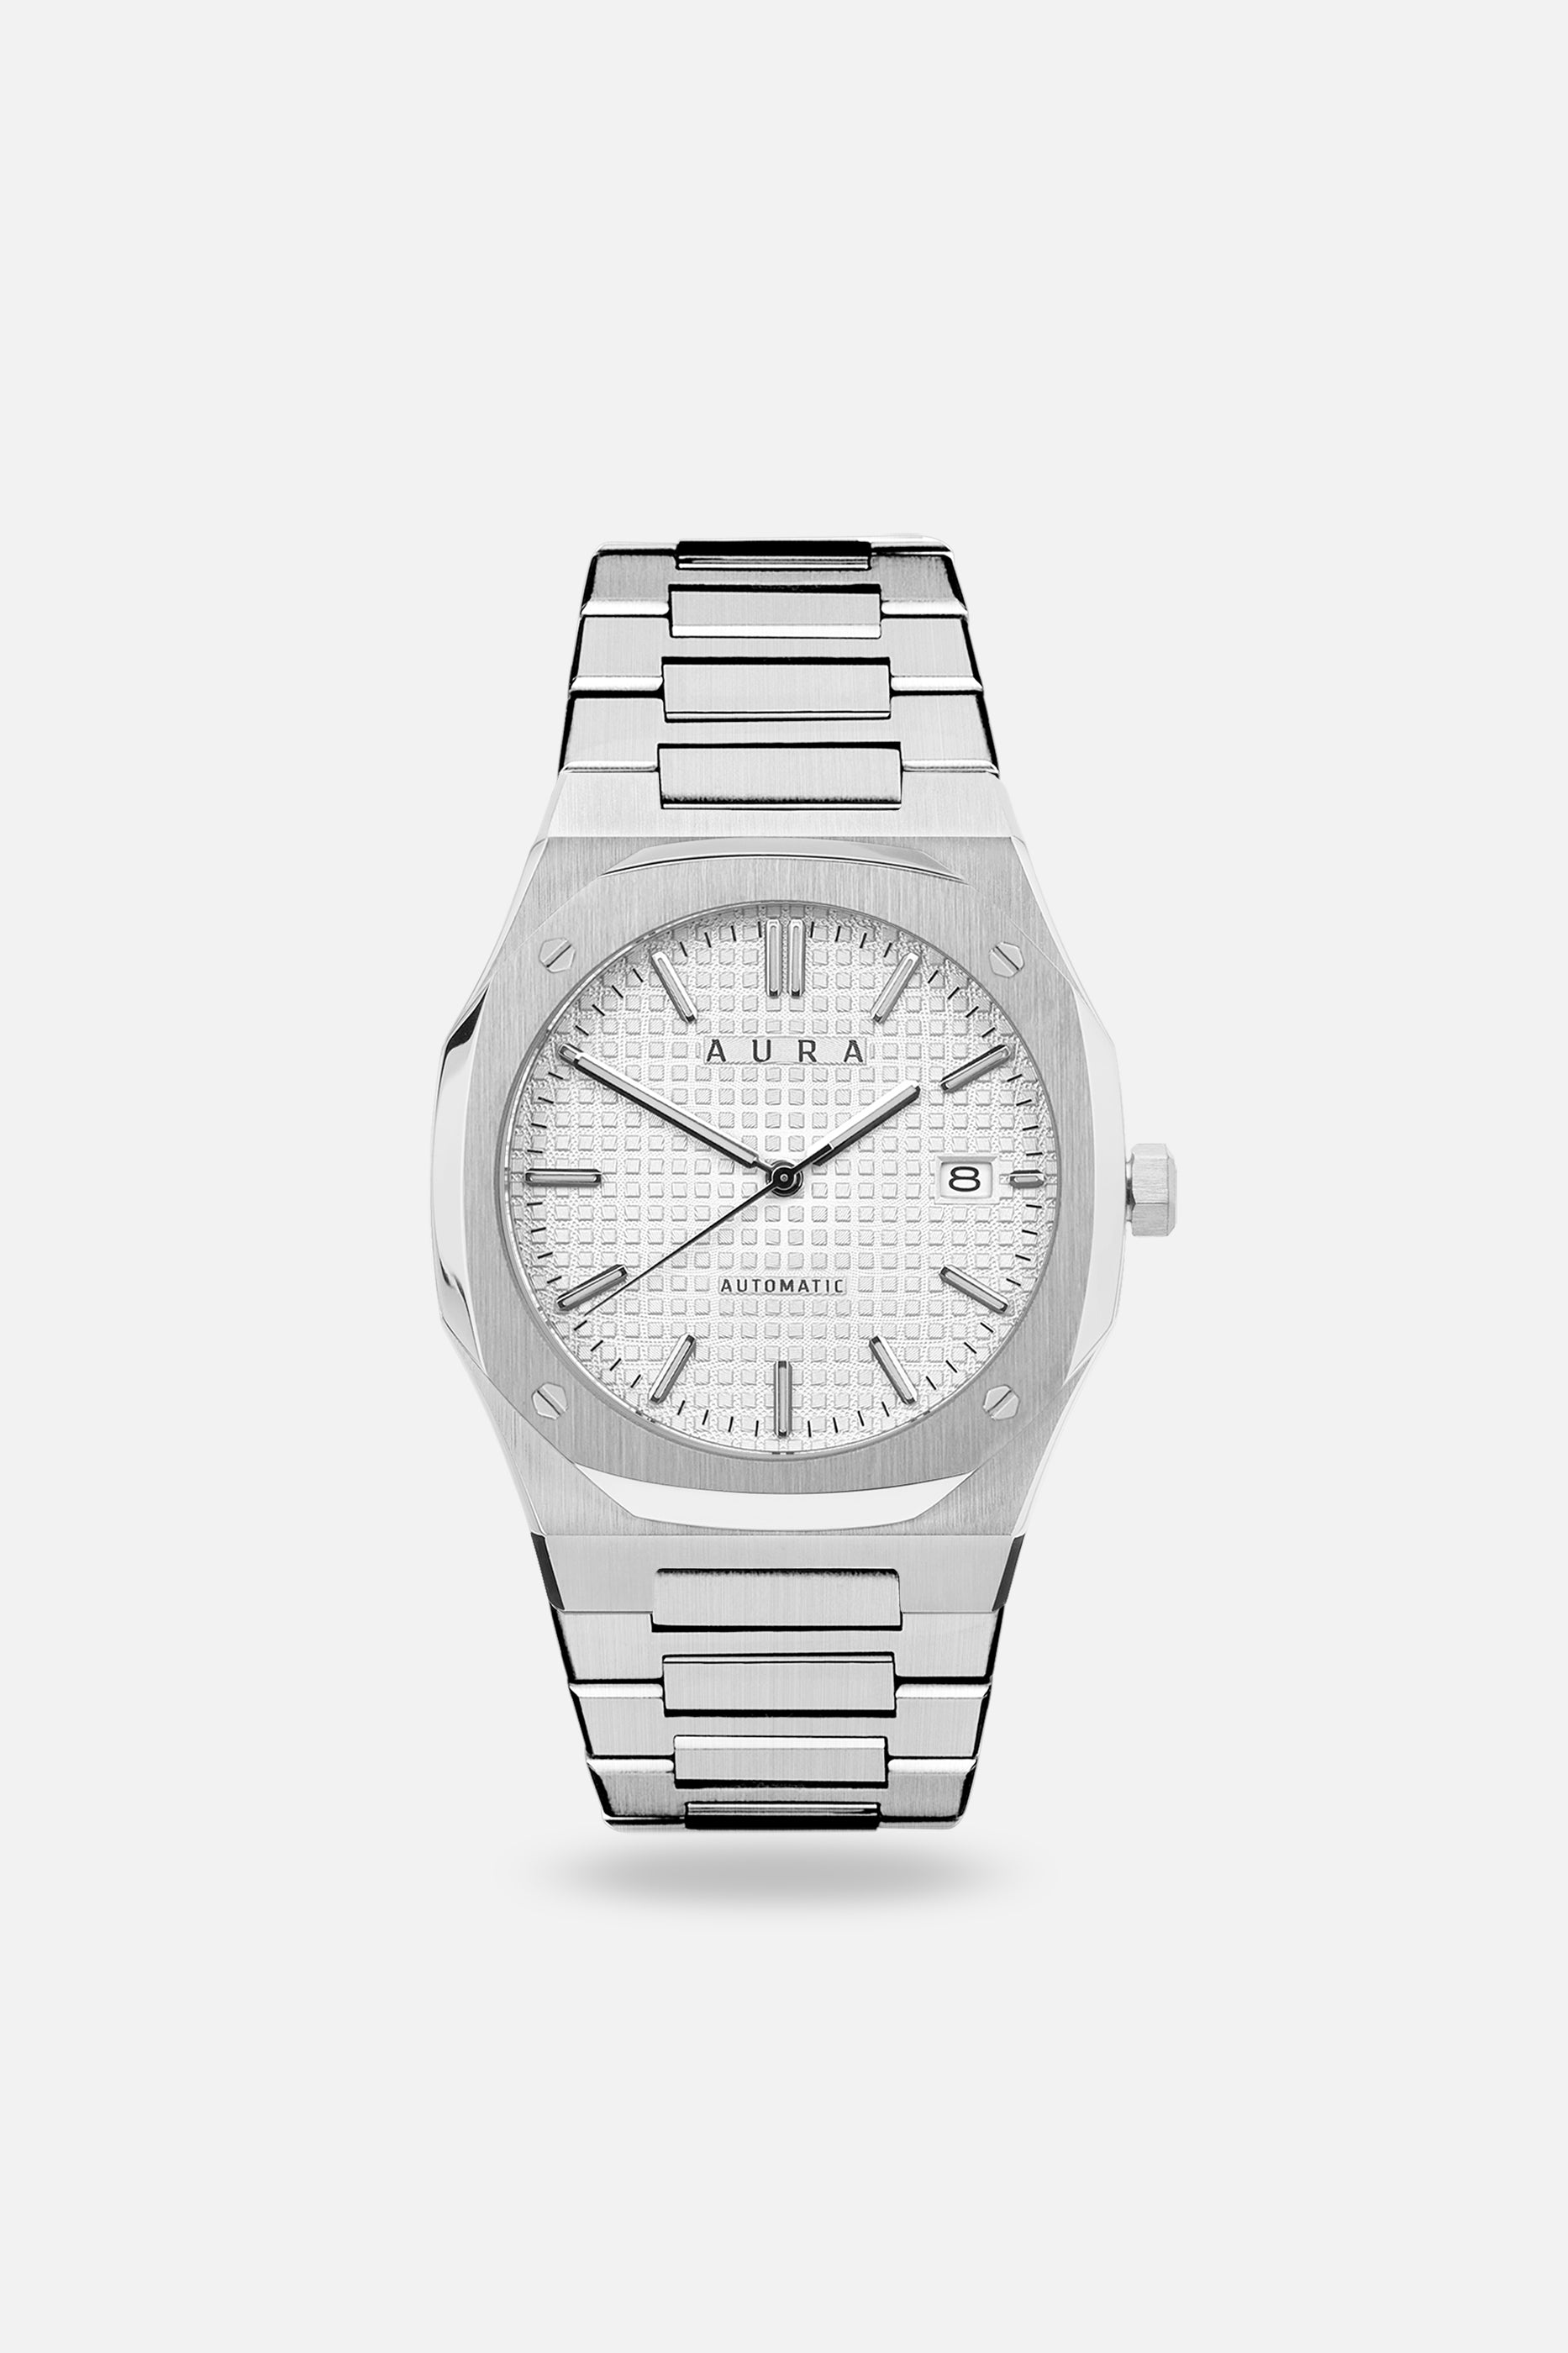 Swarovski Crystalline Aura watch , Leather strap, Gray, Rose gold-tone  5519450 | eBay